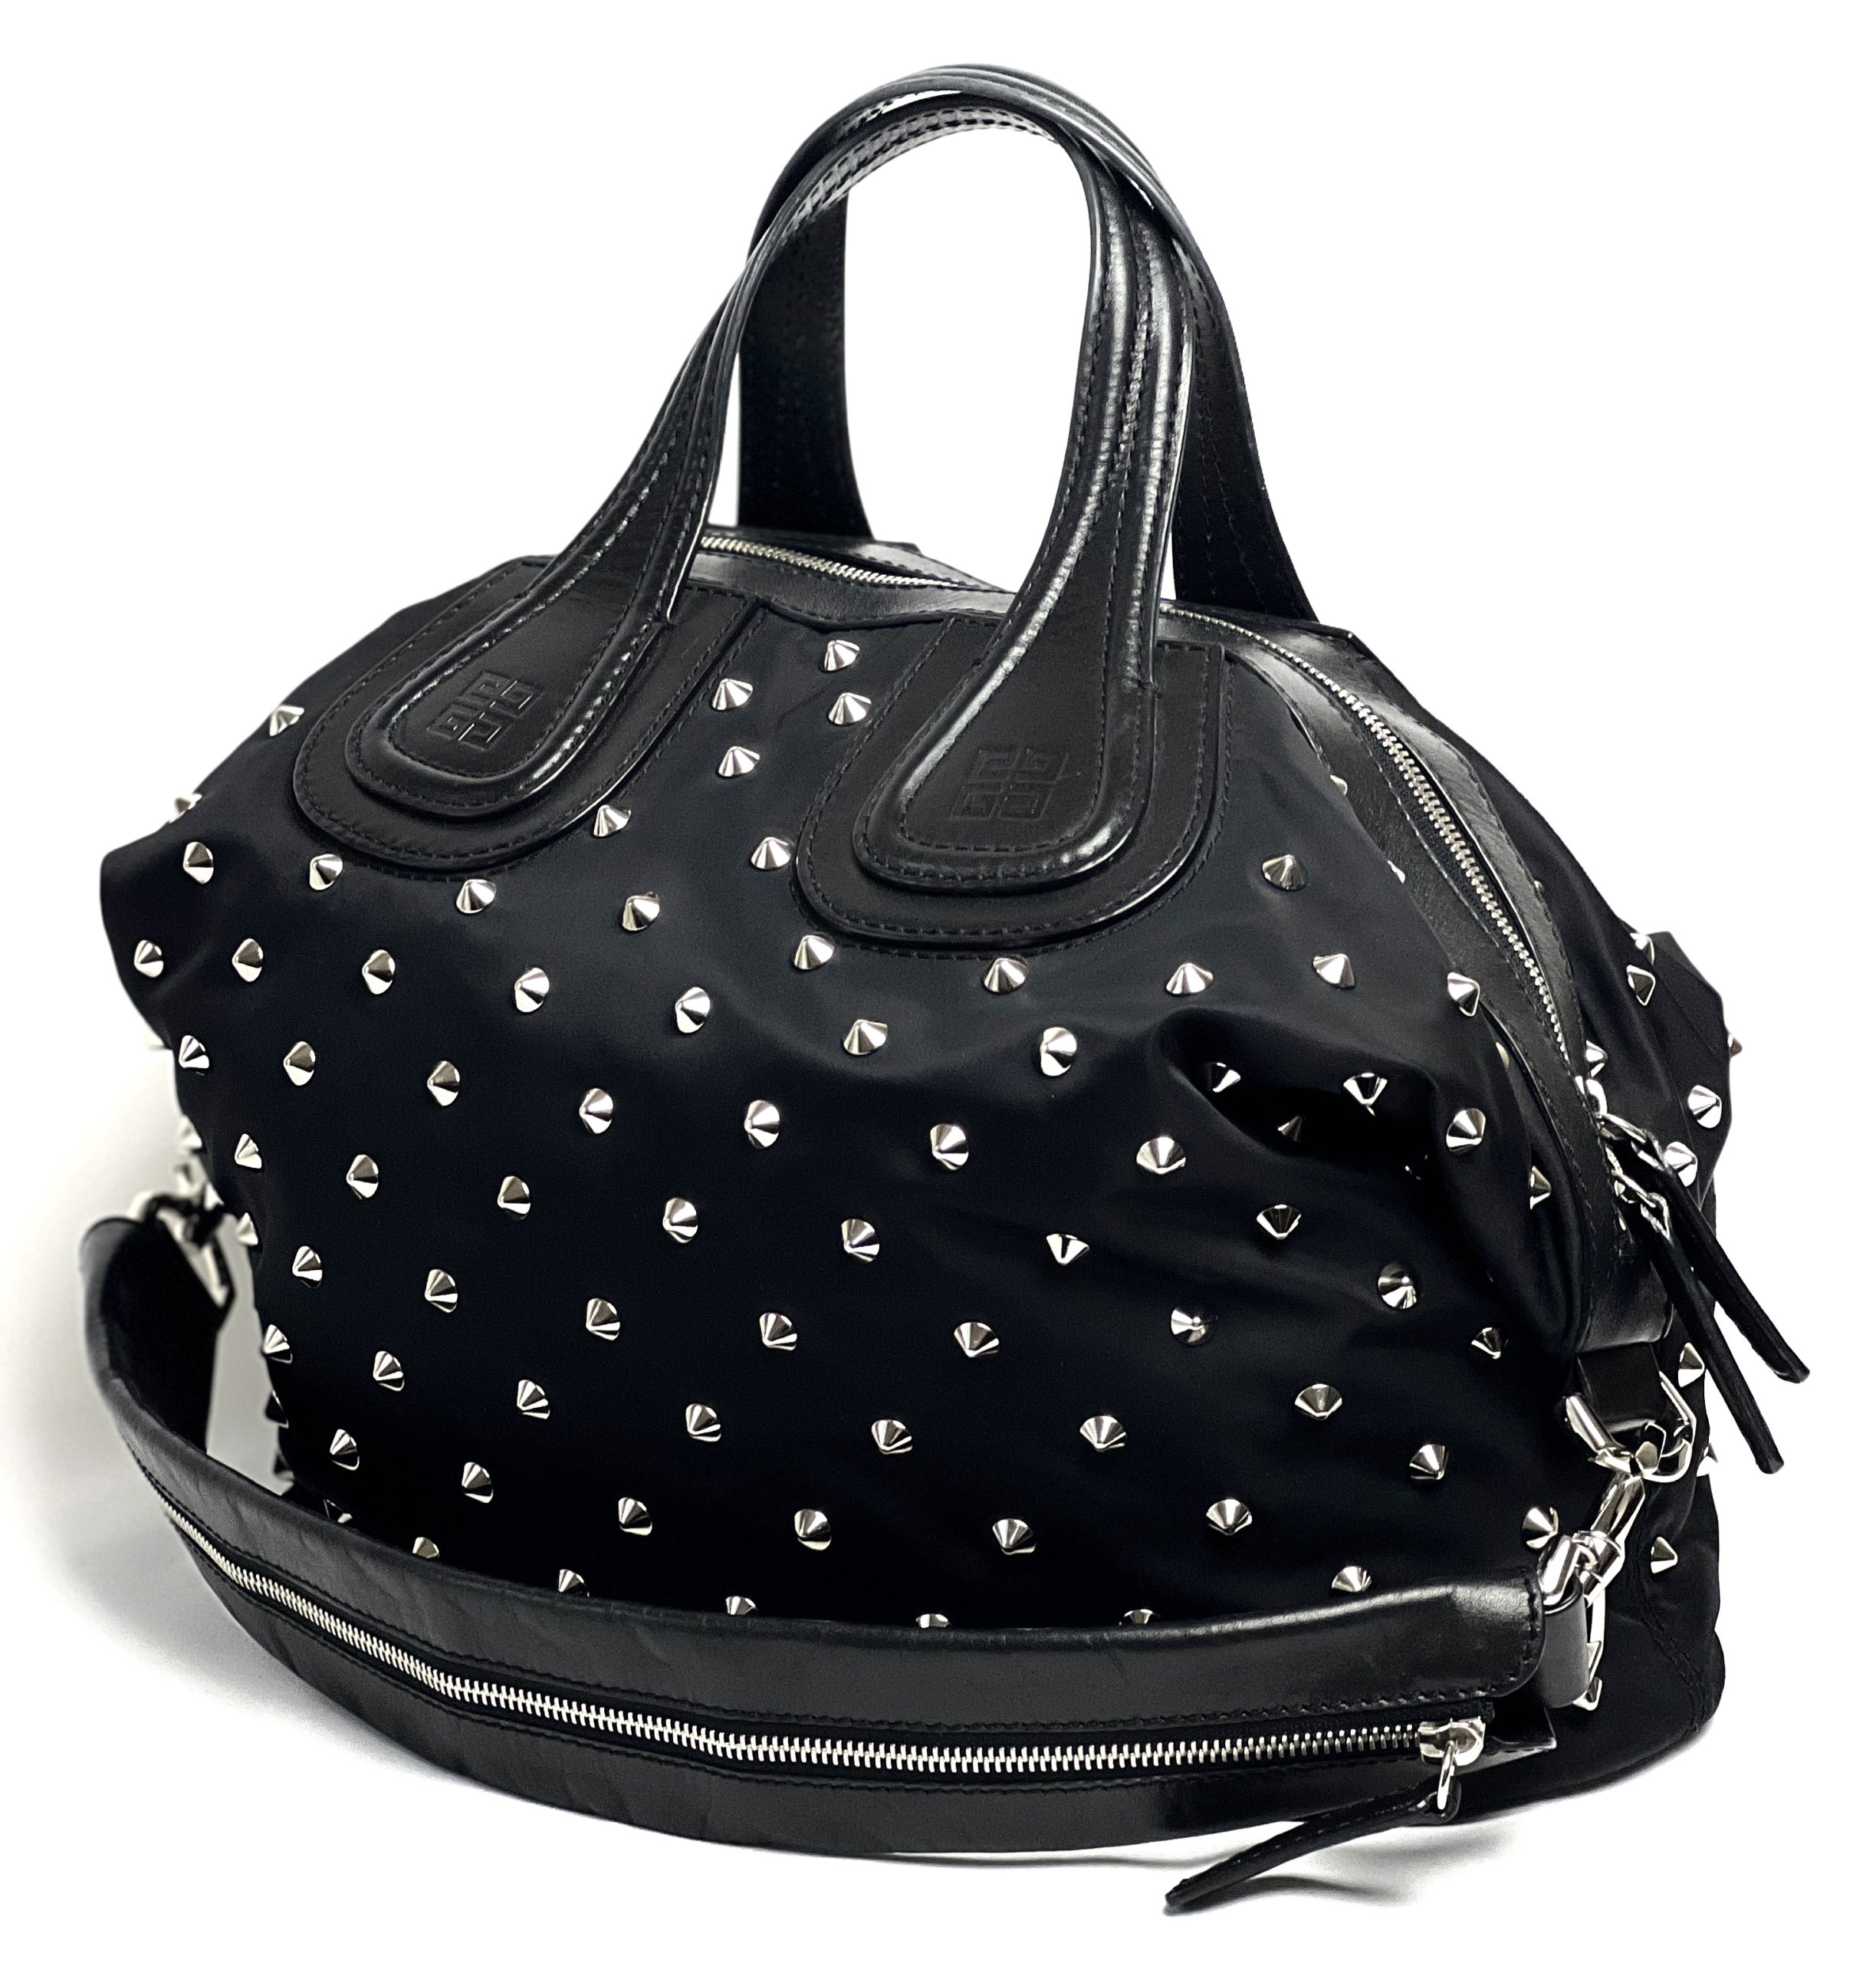 Givenchy Black Leather Medium Bond Shopper Tote Bag | Designer Brand |  Authentic Givenchy | The Bag Hub